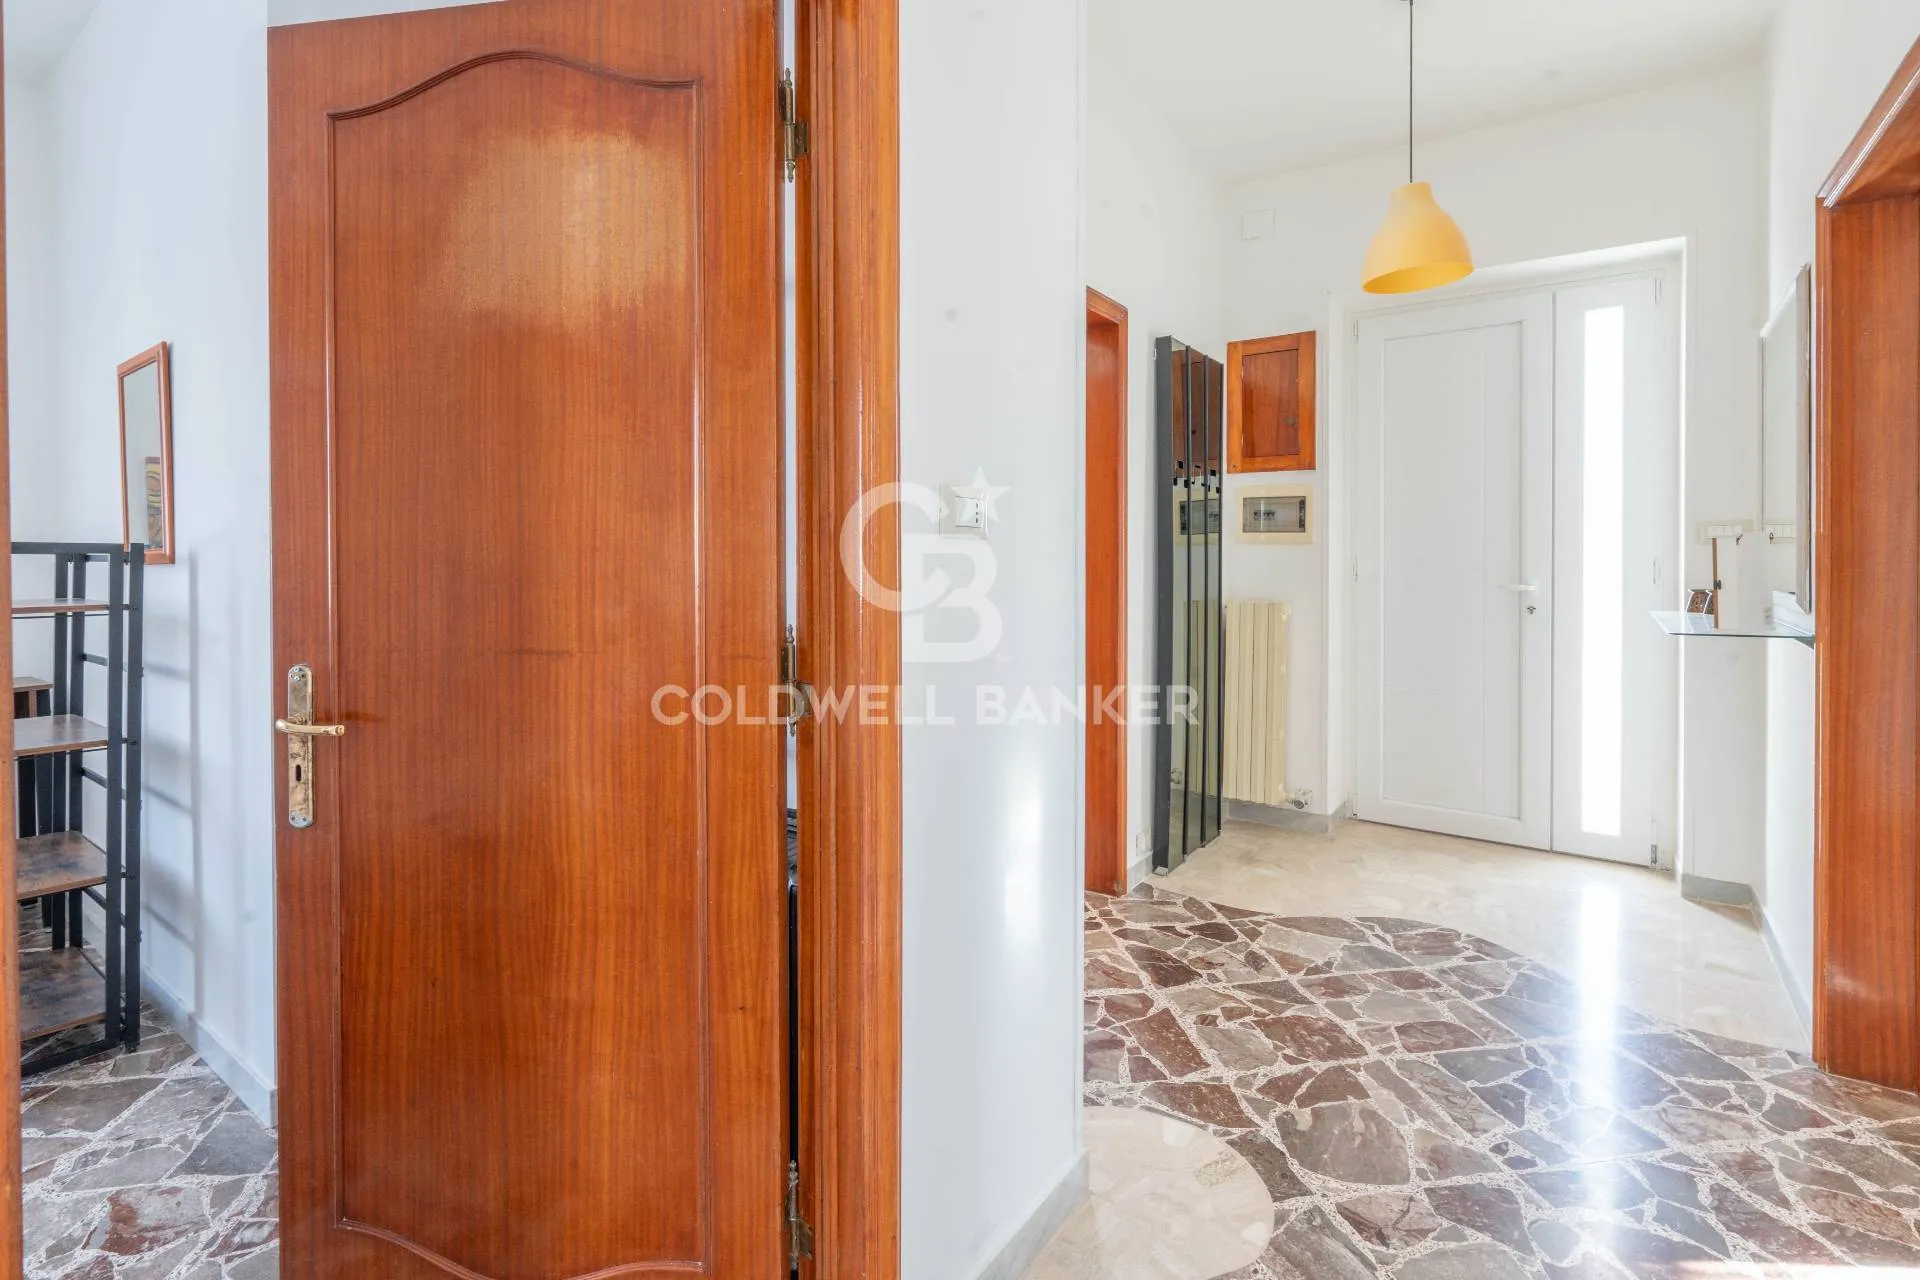 Immagine per Appartamento in vendita a Nardò Via Aurelia